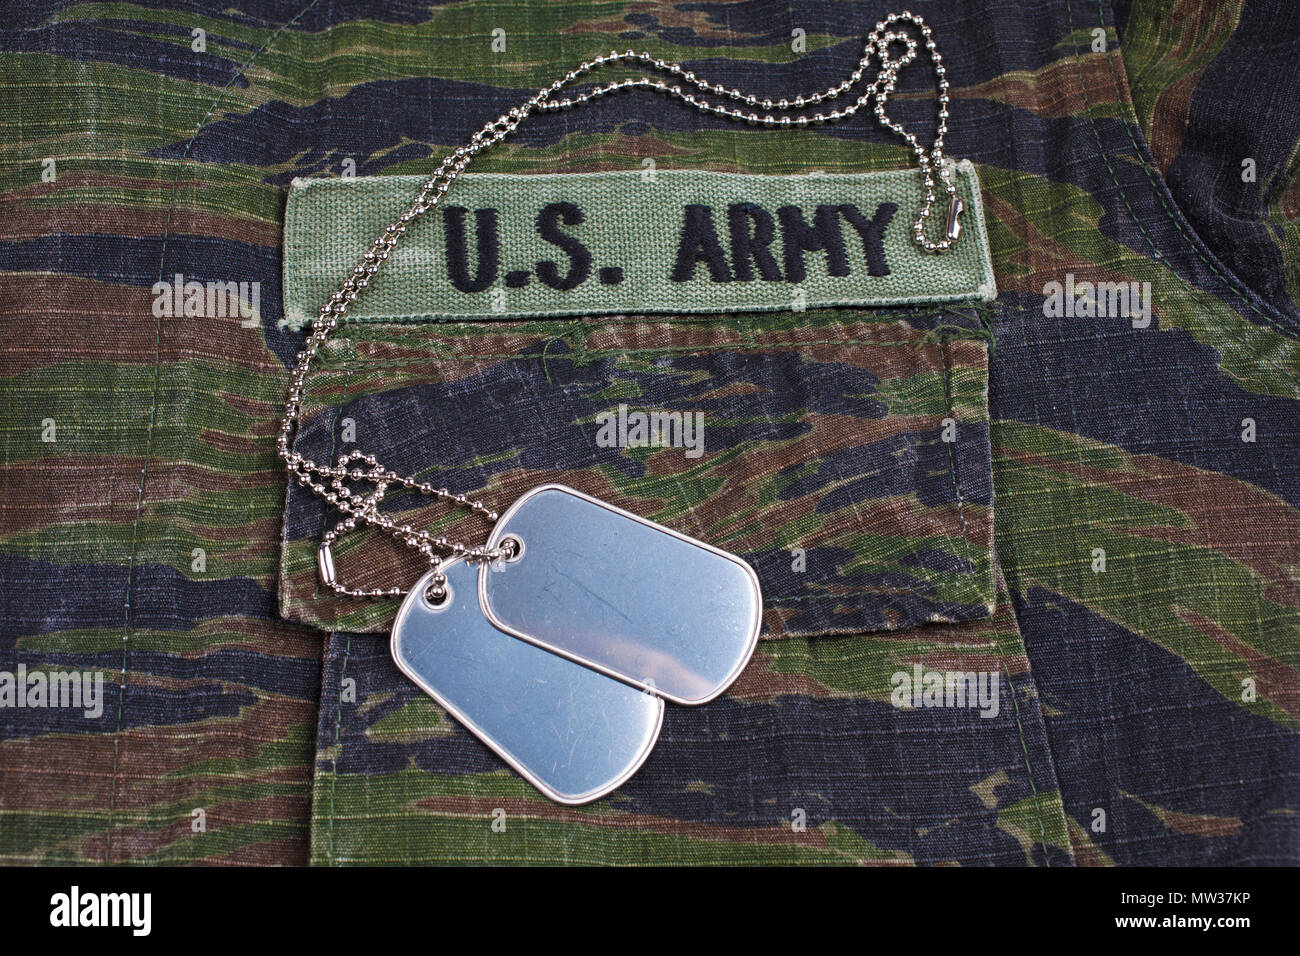 KIEV, UKRAINE - Sept 12, 2016. US ARMY branch tape and dog tags on tiger stripe camouflage uniform Stock Photo